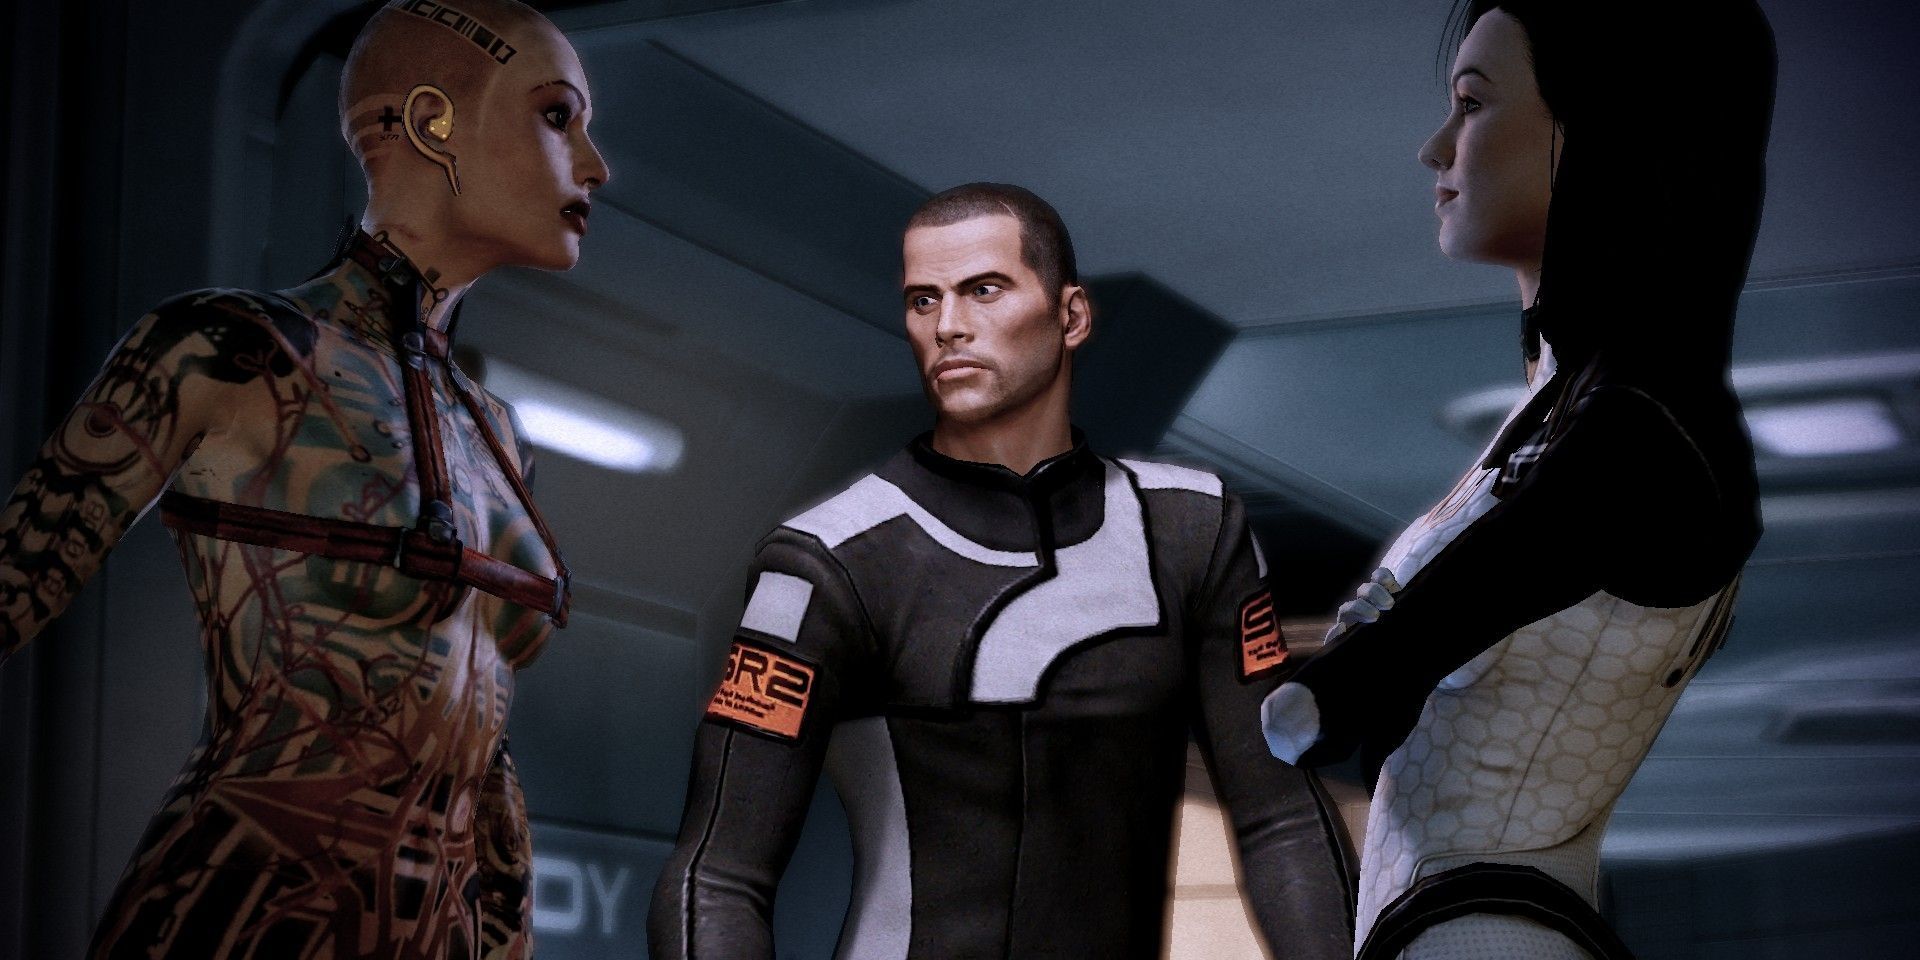 Jack & Miranda Confrontation From Mass Effect 2